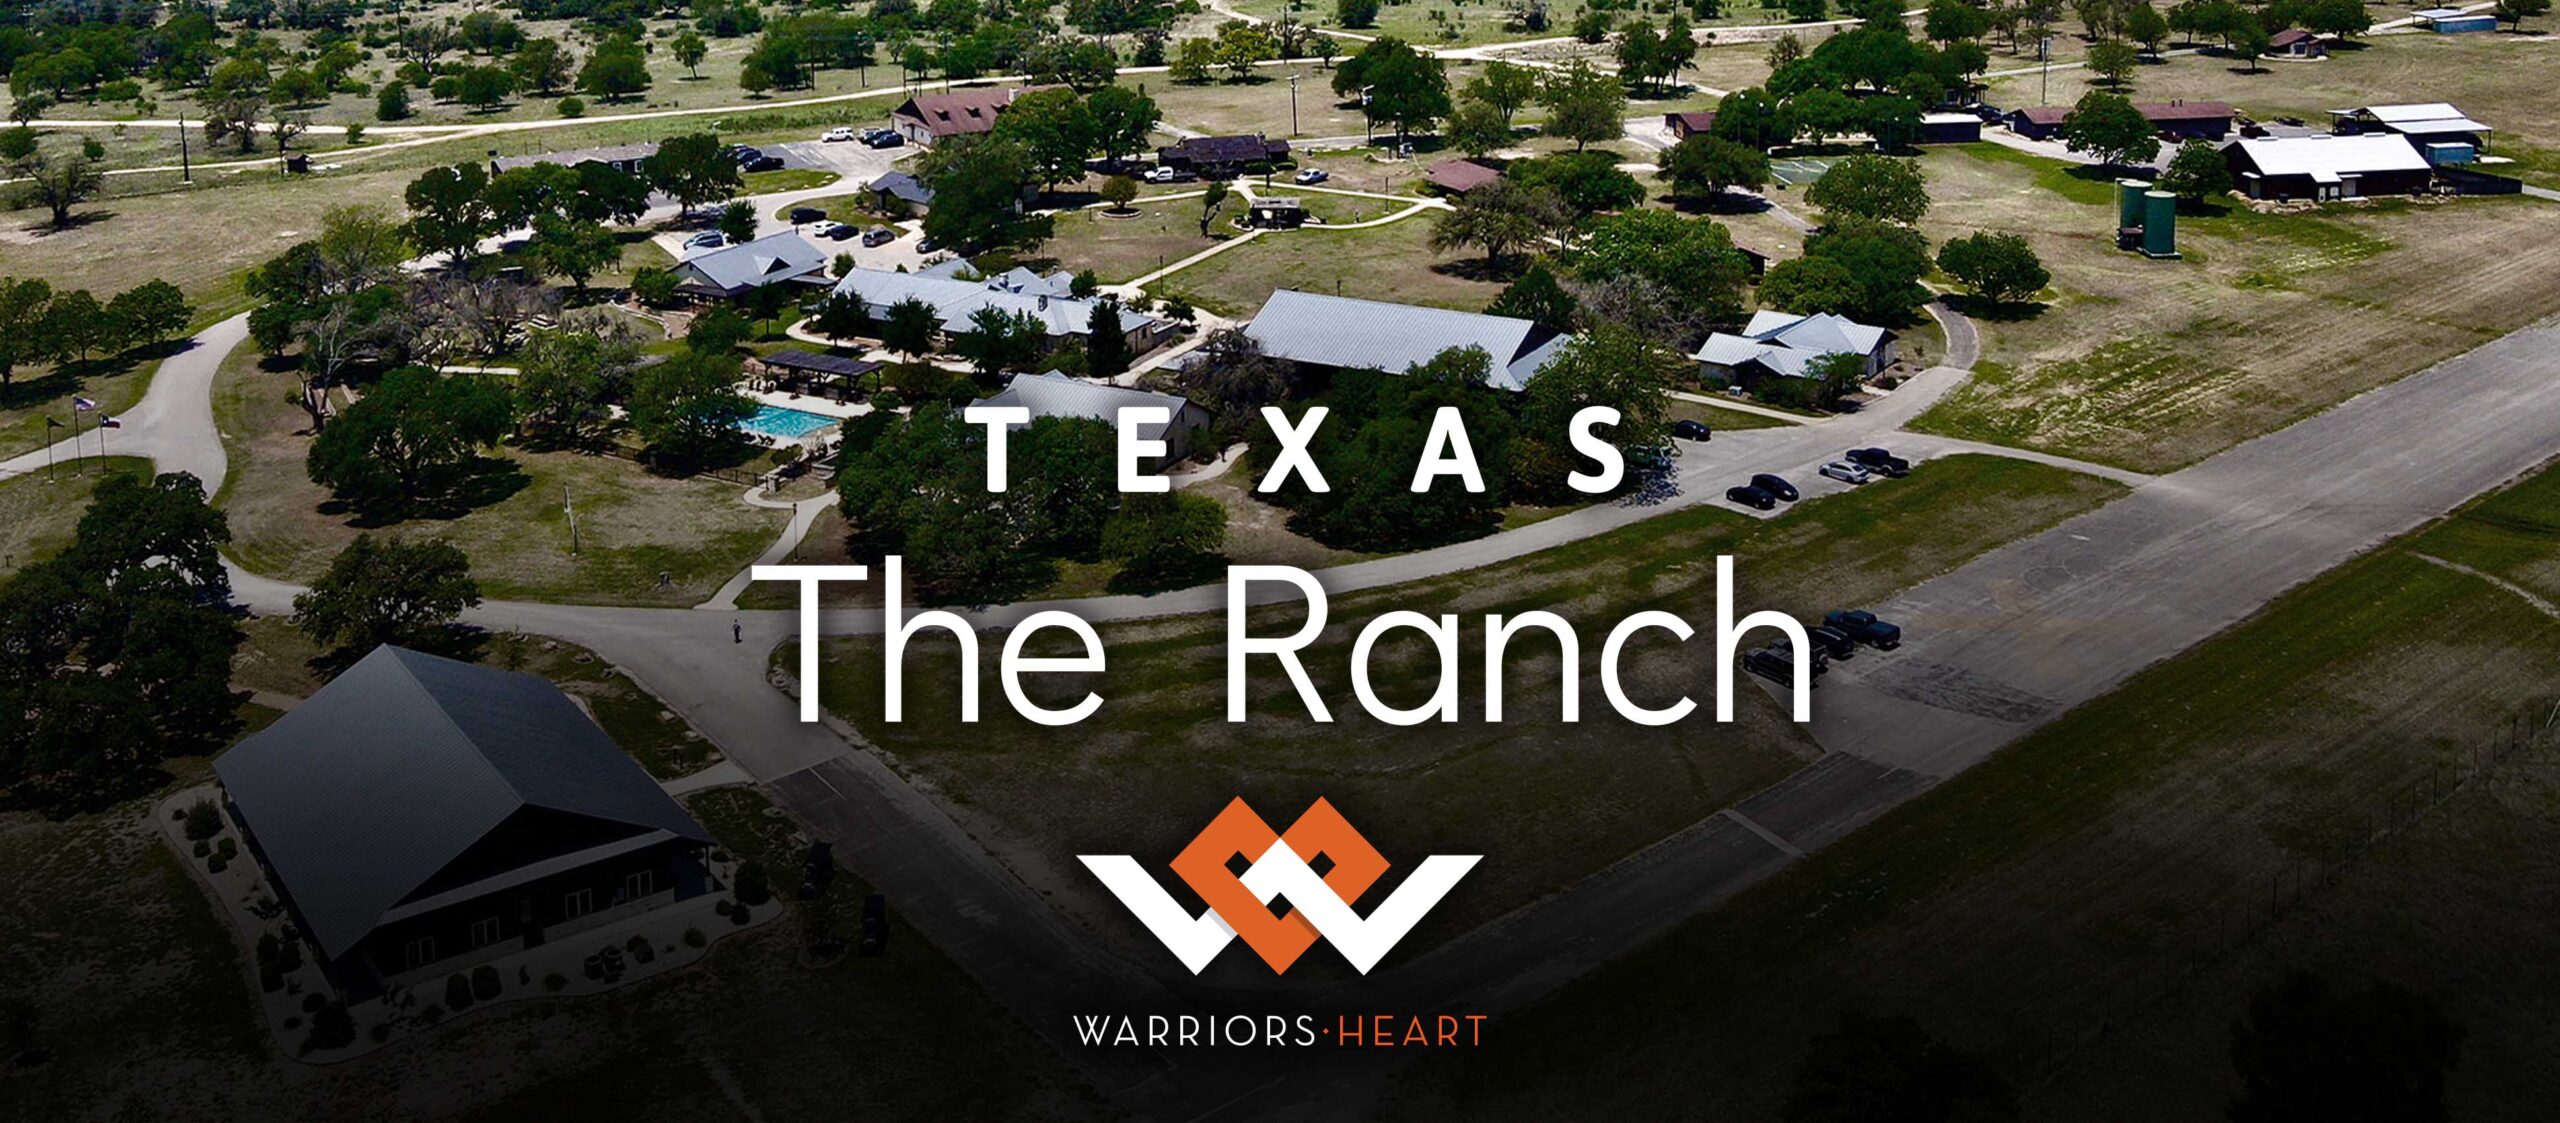 Warriors Heart in Bandera, Texas - The Ranch